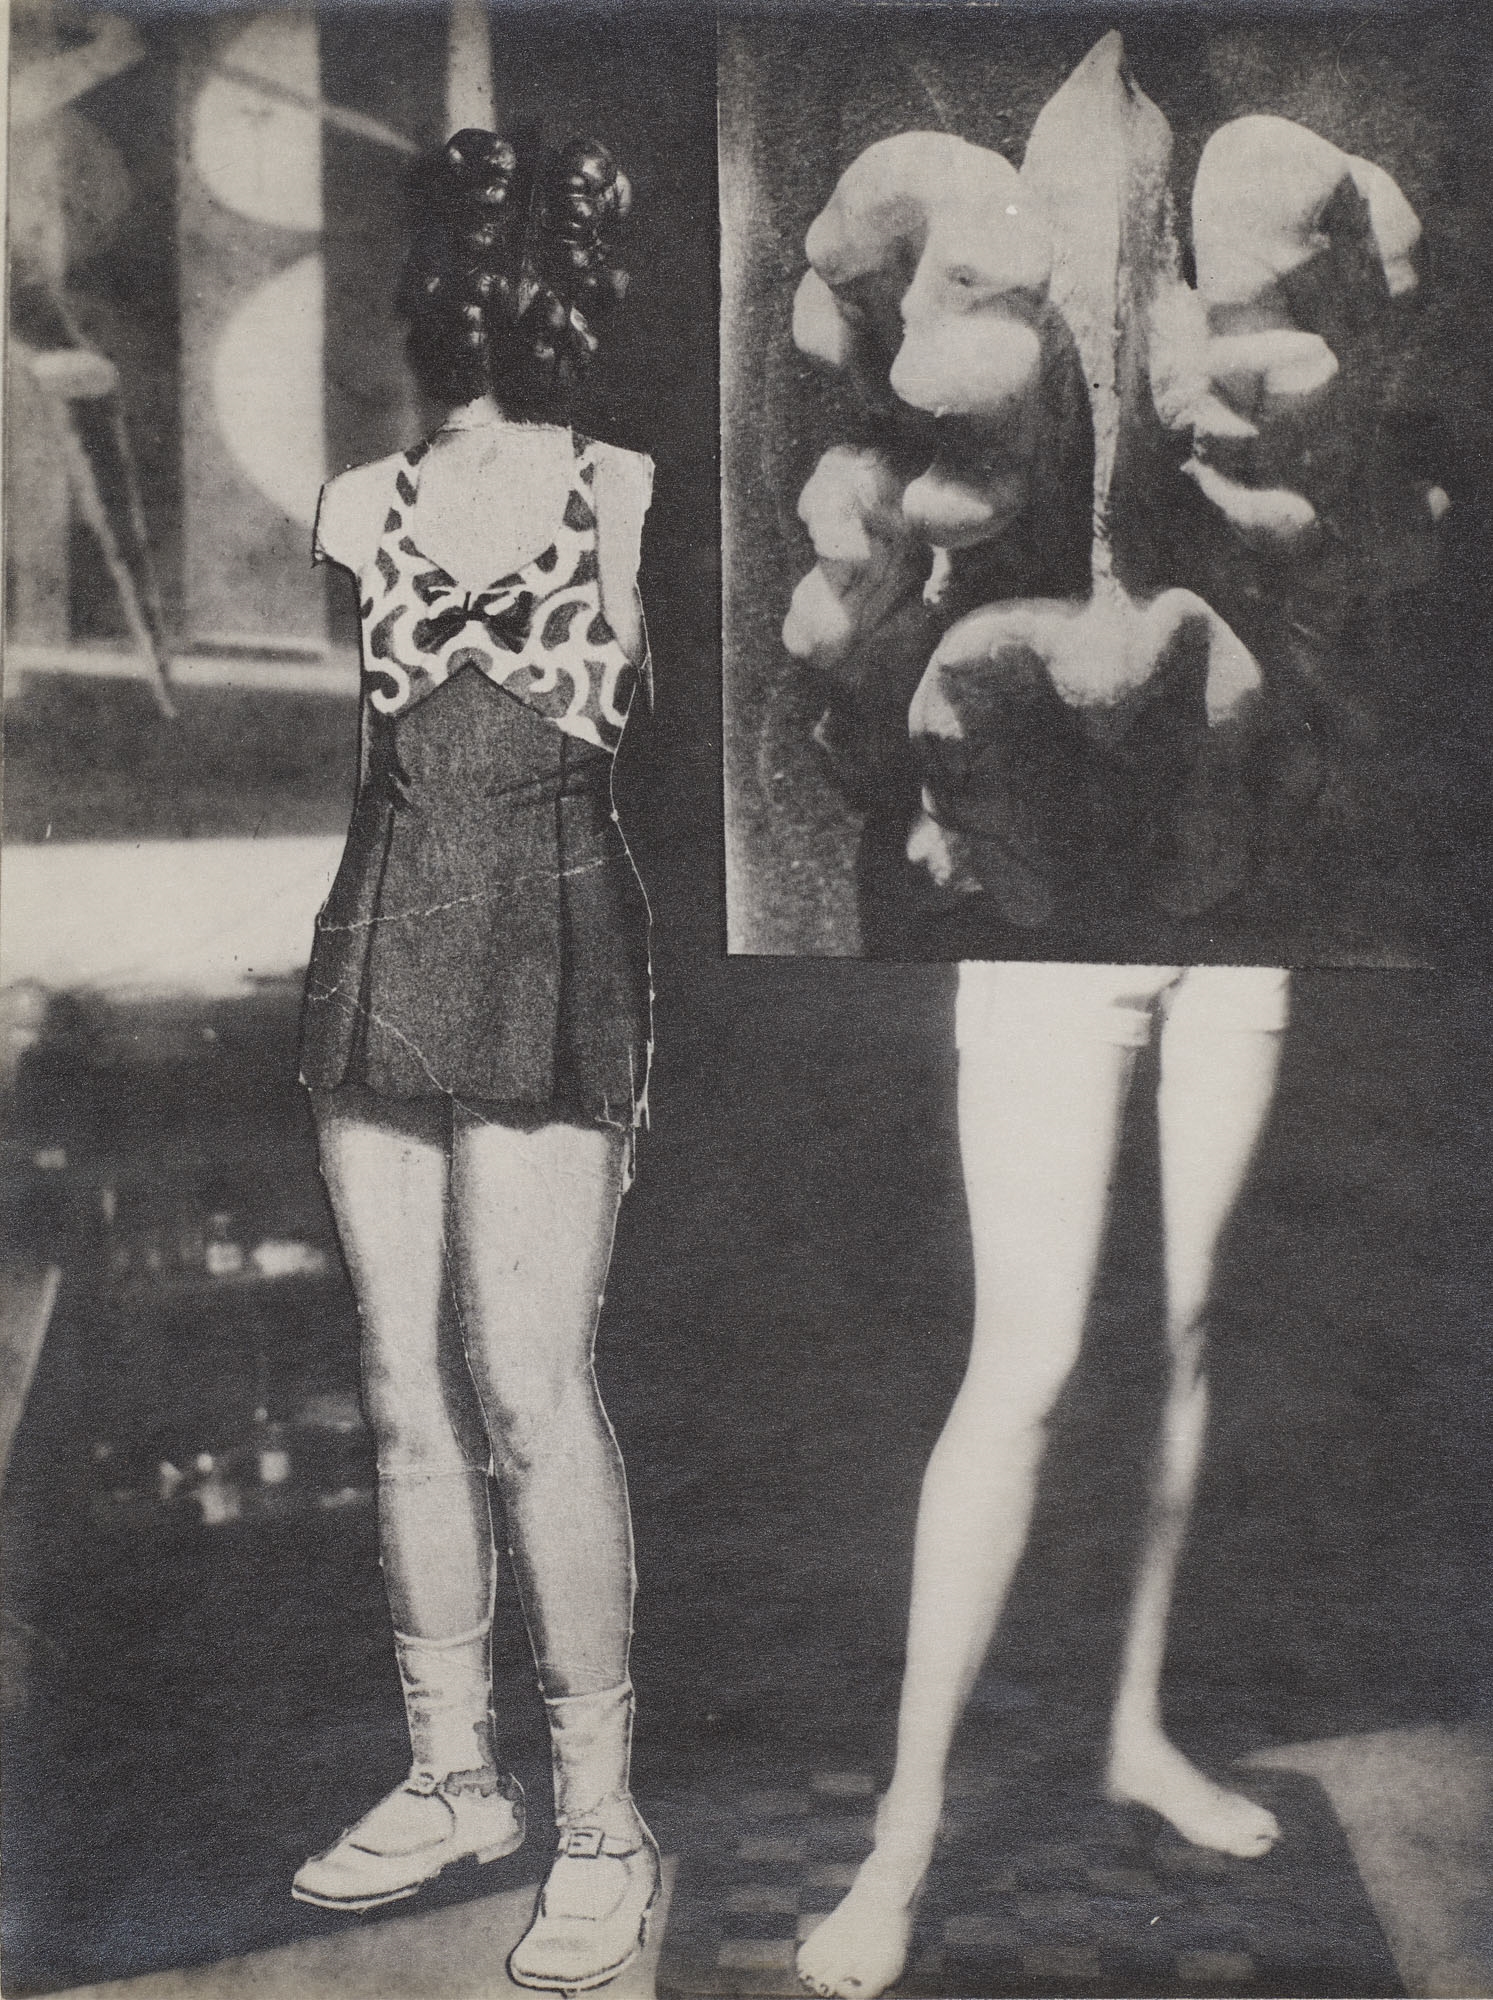 Filles de noix by Man Ray, 1943